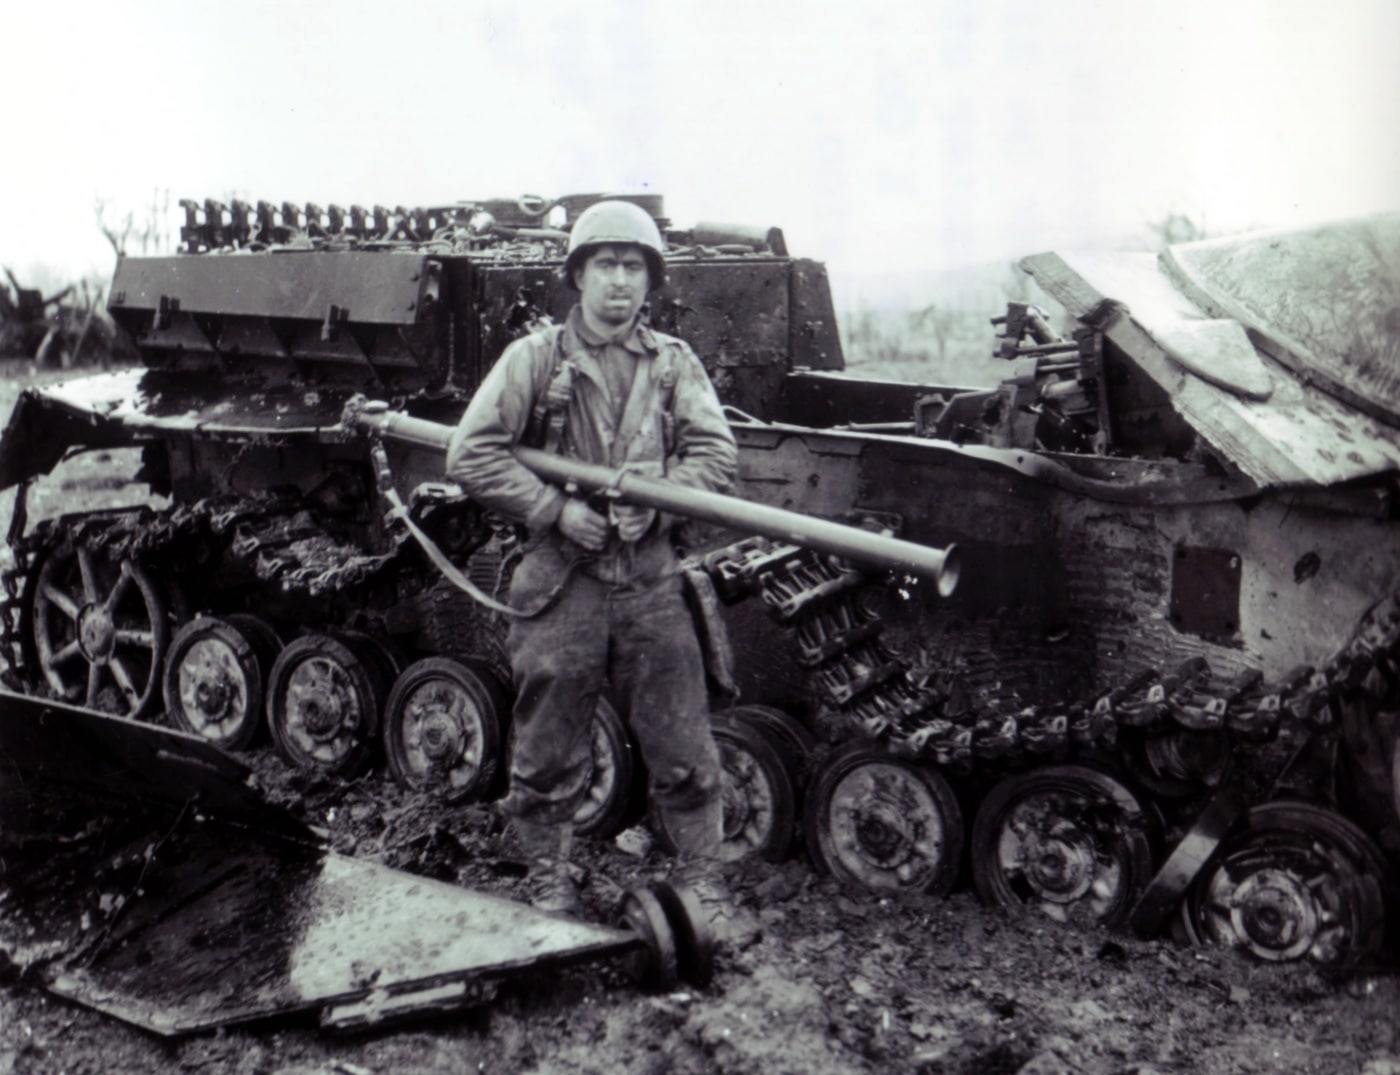 us soldier with bazooka destroys jadgpanzer